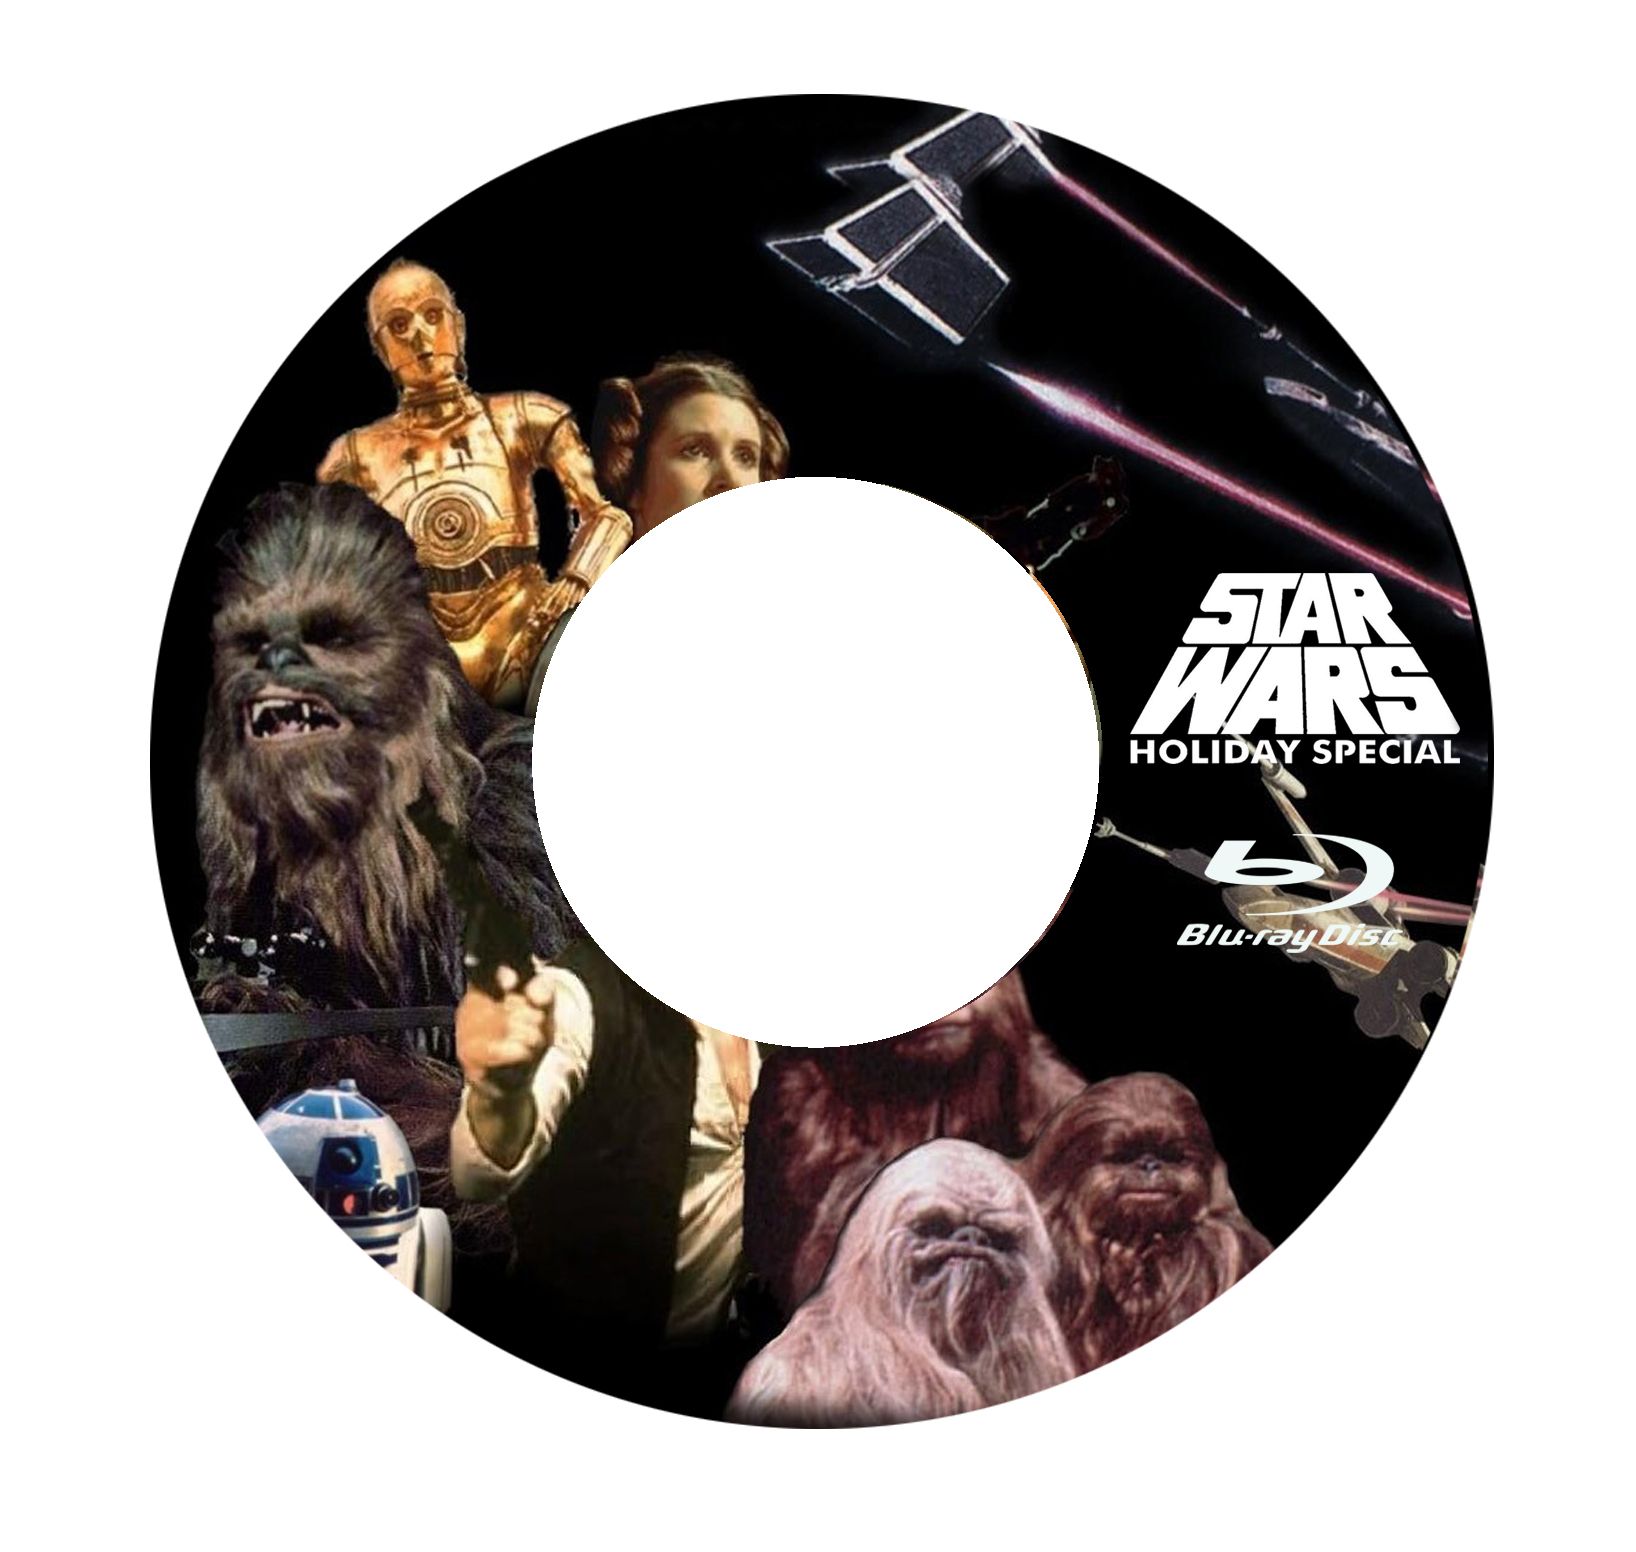 Star Wars HS Blu Ray Disc Image Print Out.jpg